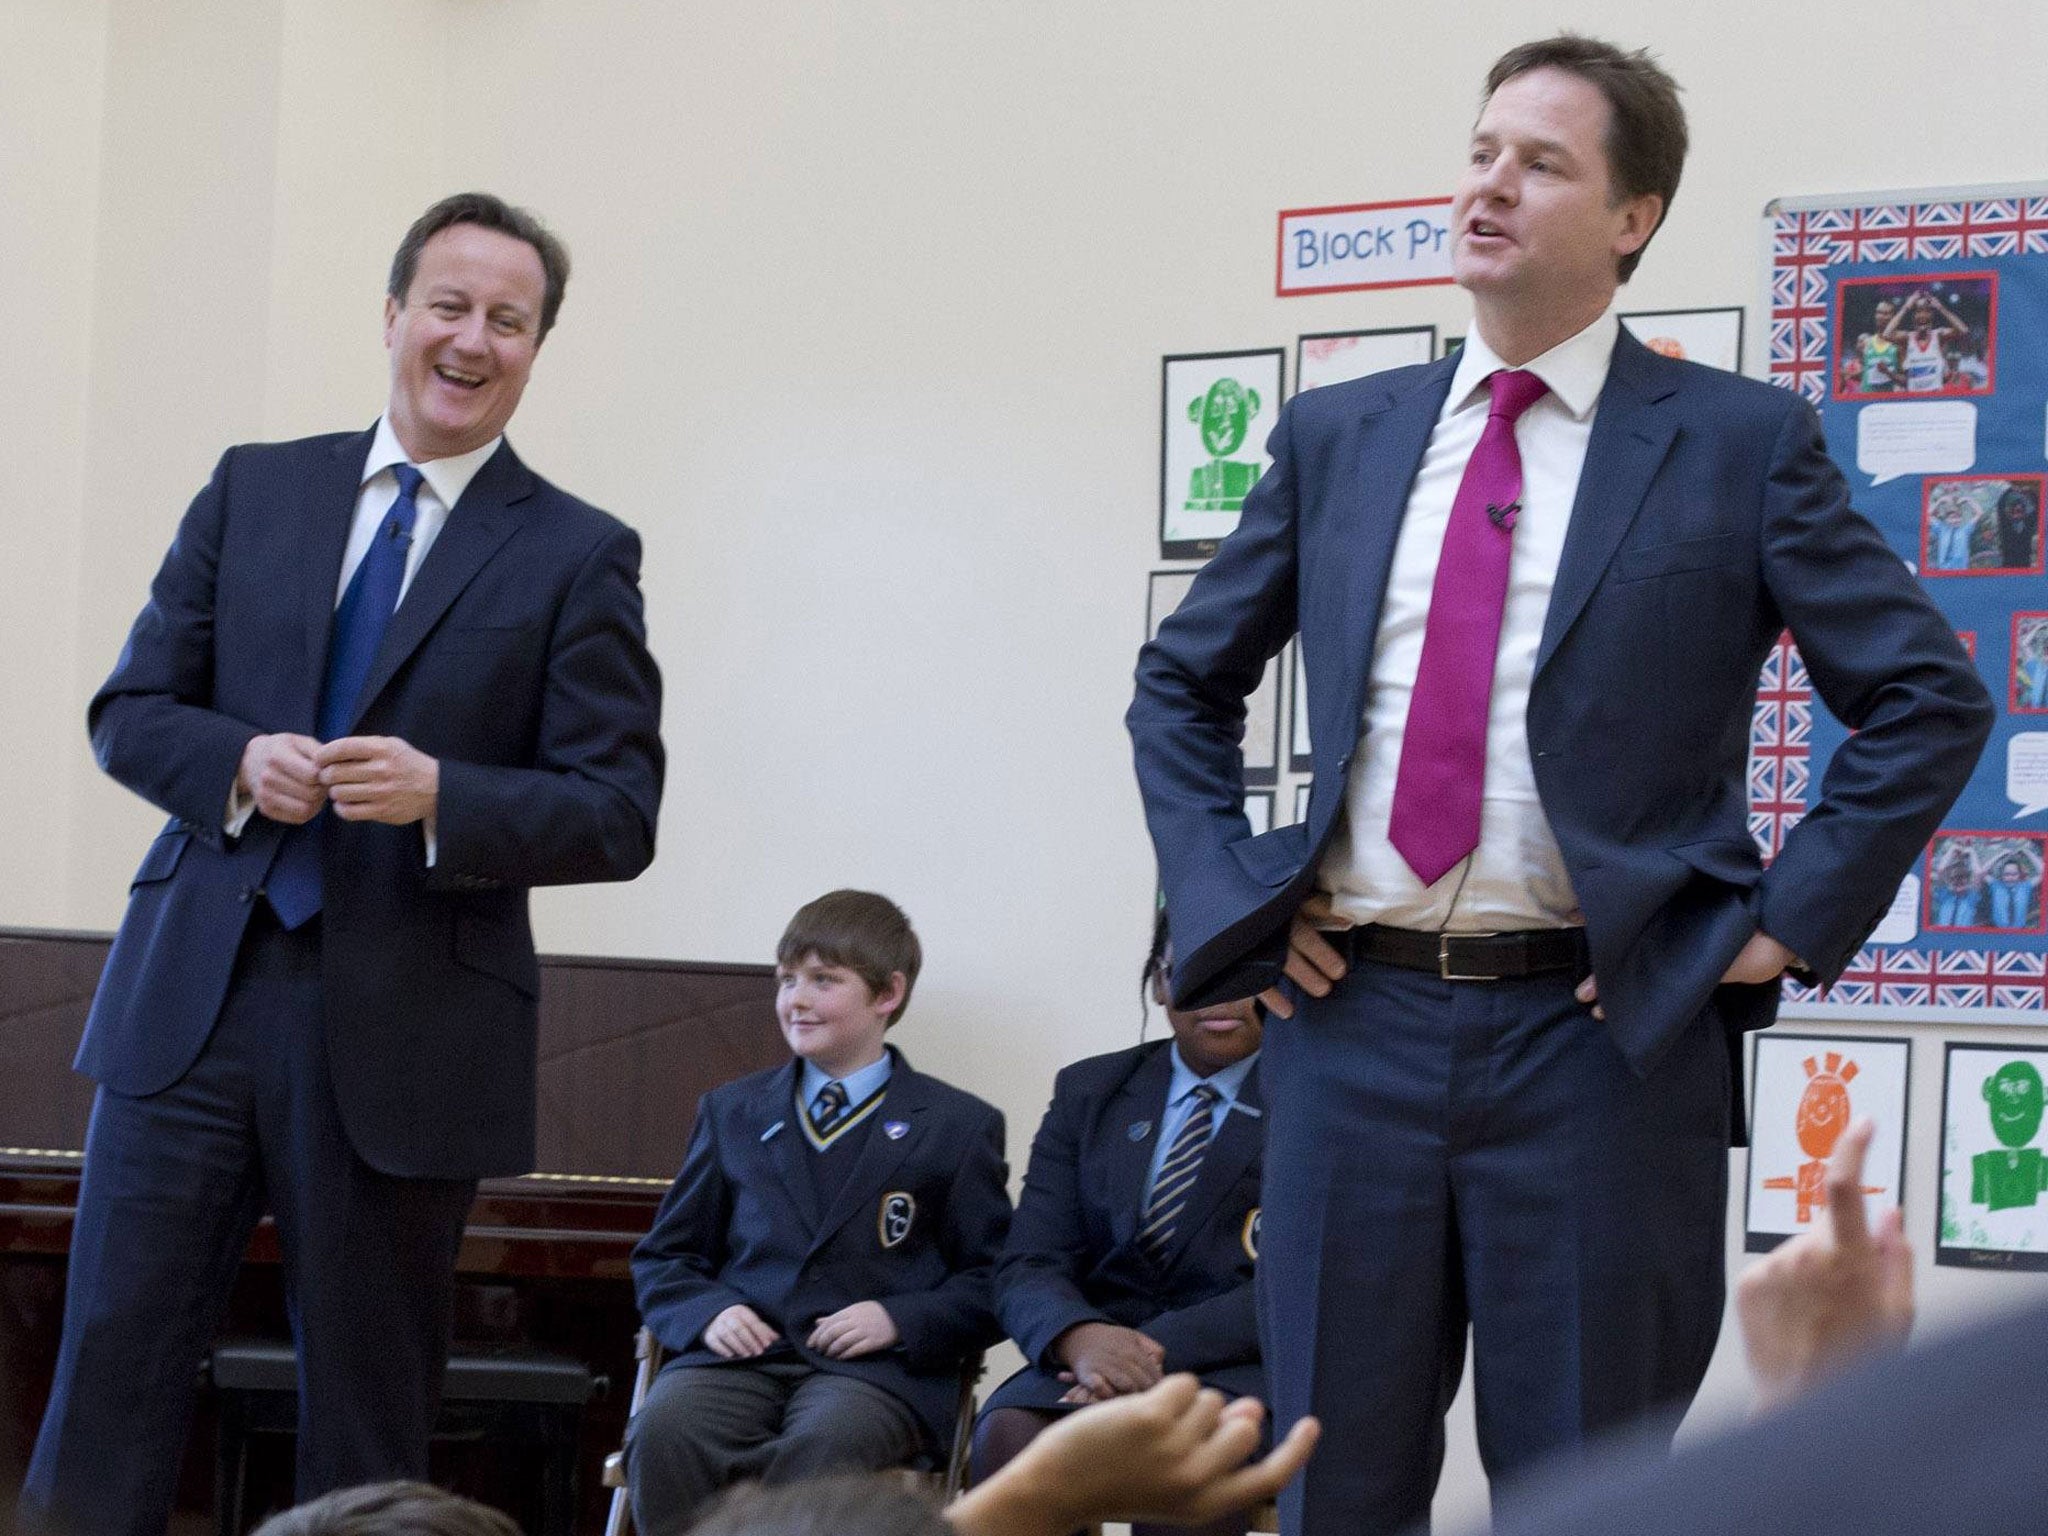 David Cameron and Nick Clegg meet Brixton schoolchildren last month